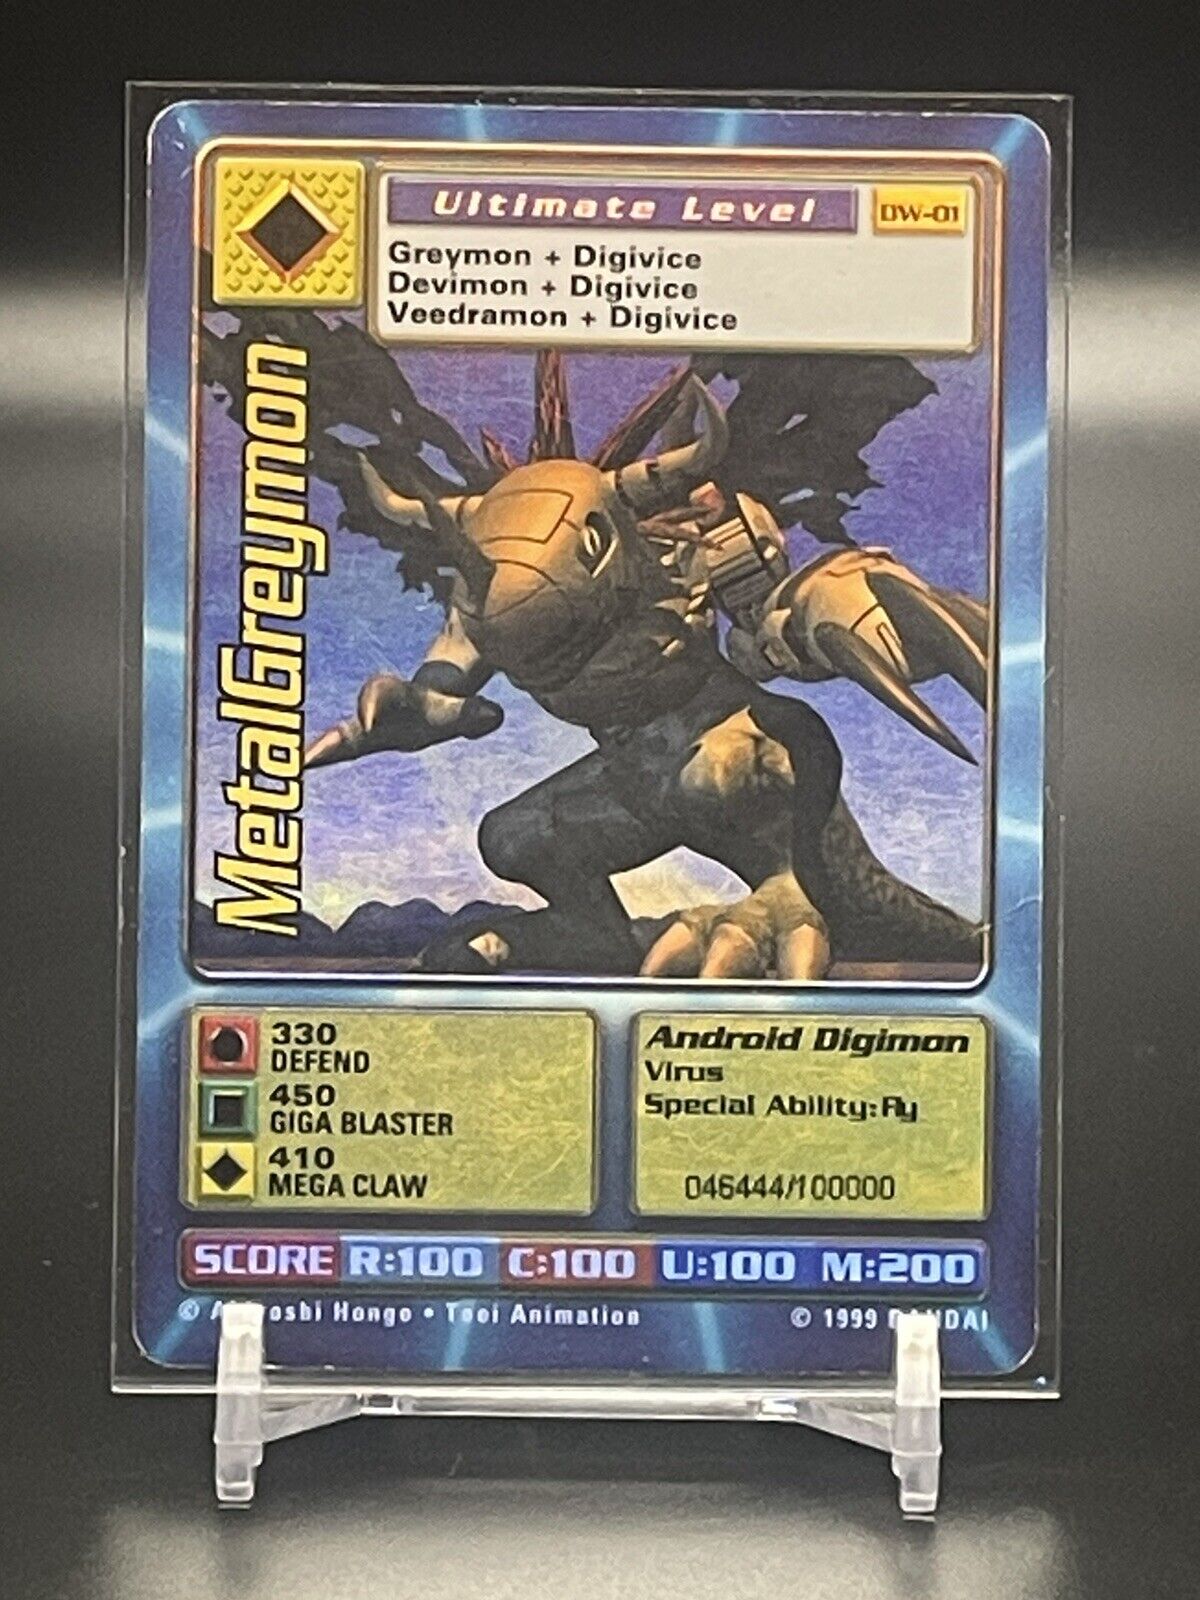 Digimon World PlayStation Promo DW-01 MetalGreymon - number 046444 / 100,000